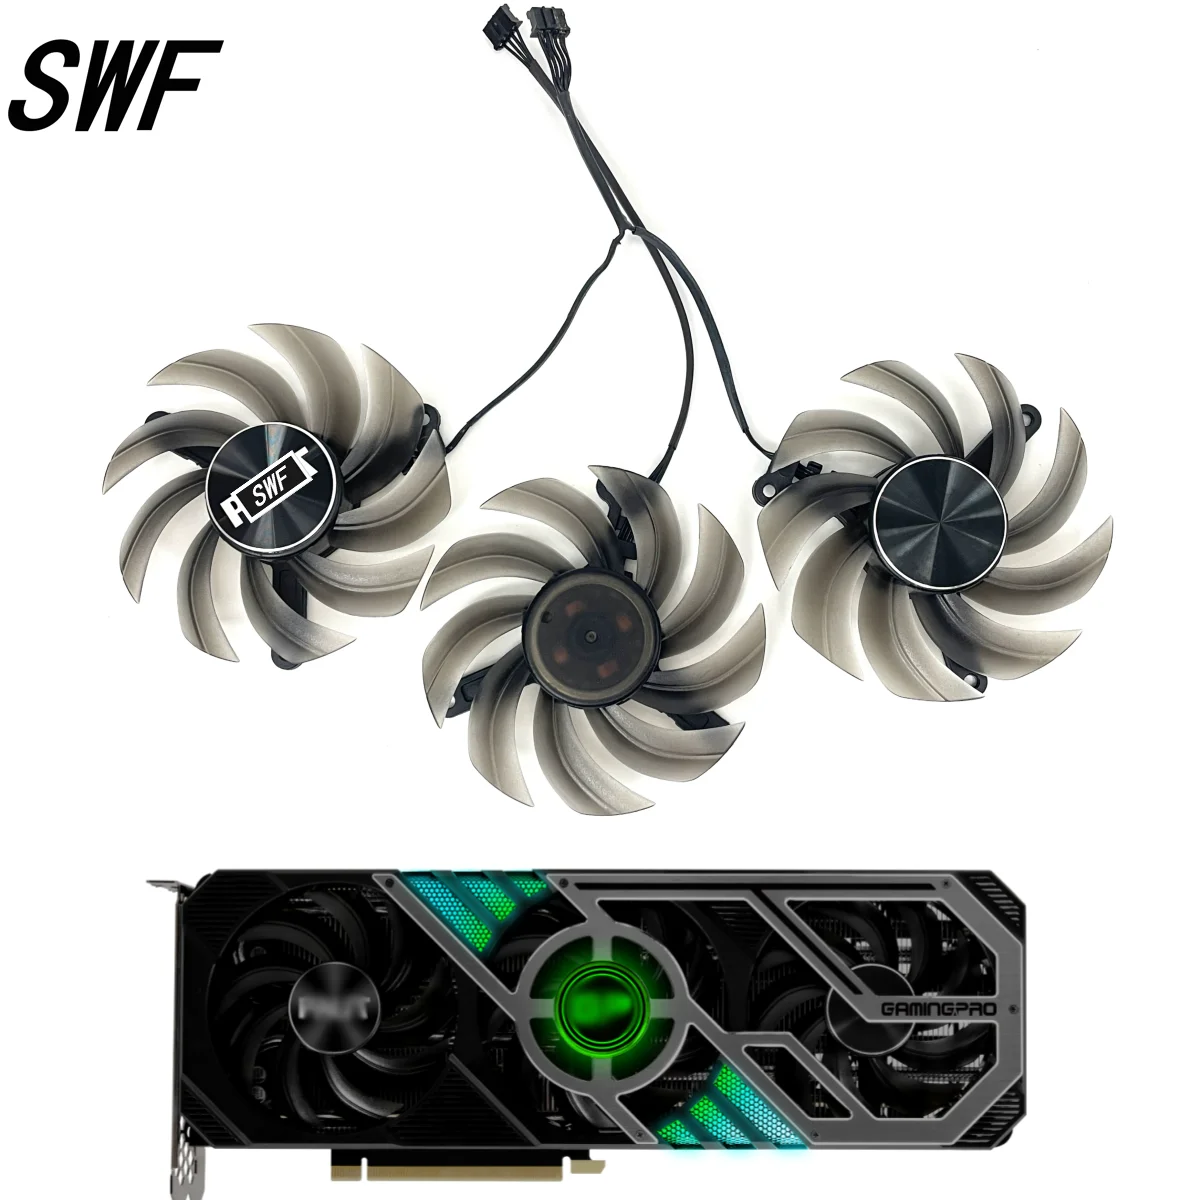 

FD8015U12D Cooling Fan For Palit GeForce RTX 3060 Ti 3070 3070Ti 3080 3080Ti 3090 Gamingpro OC Graphics Card Cooler